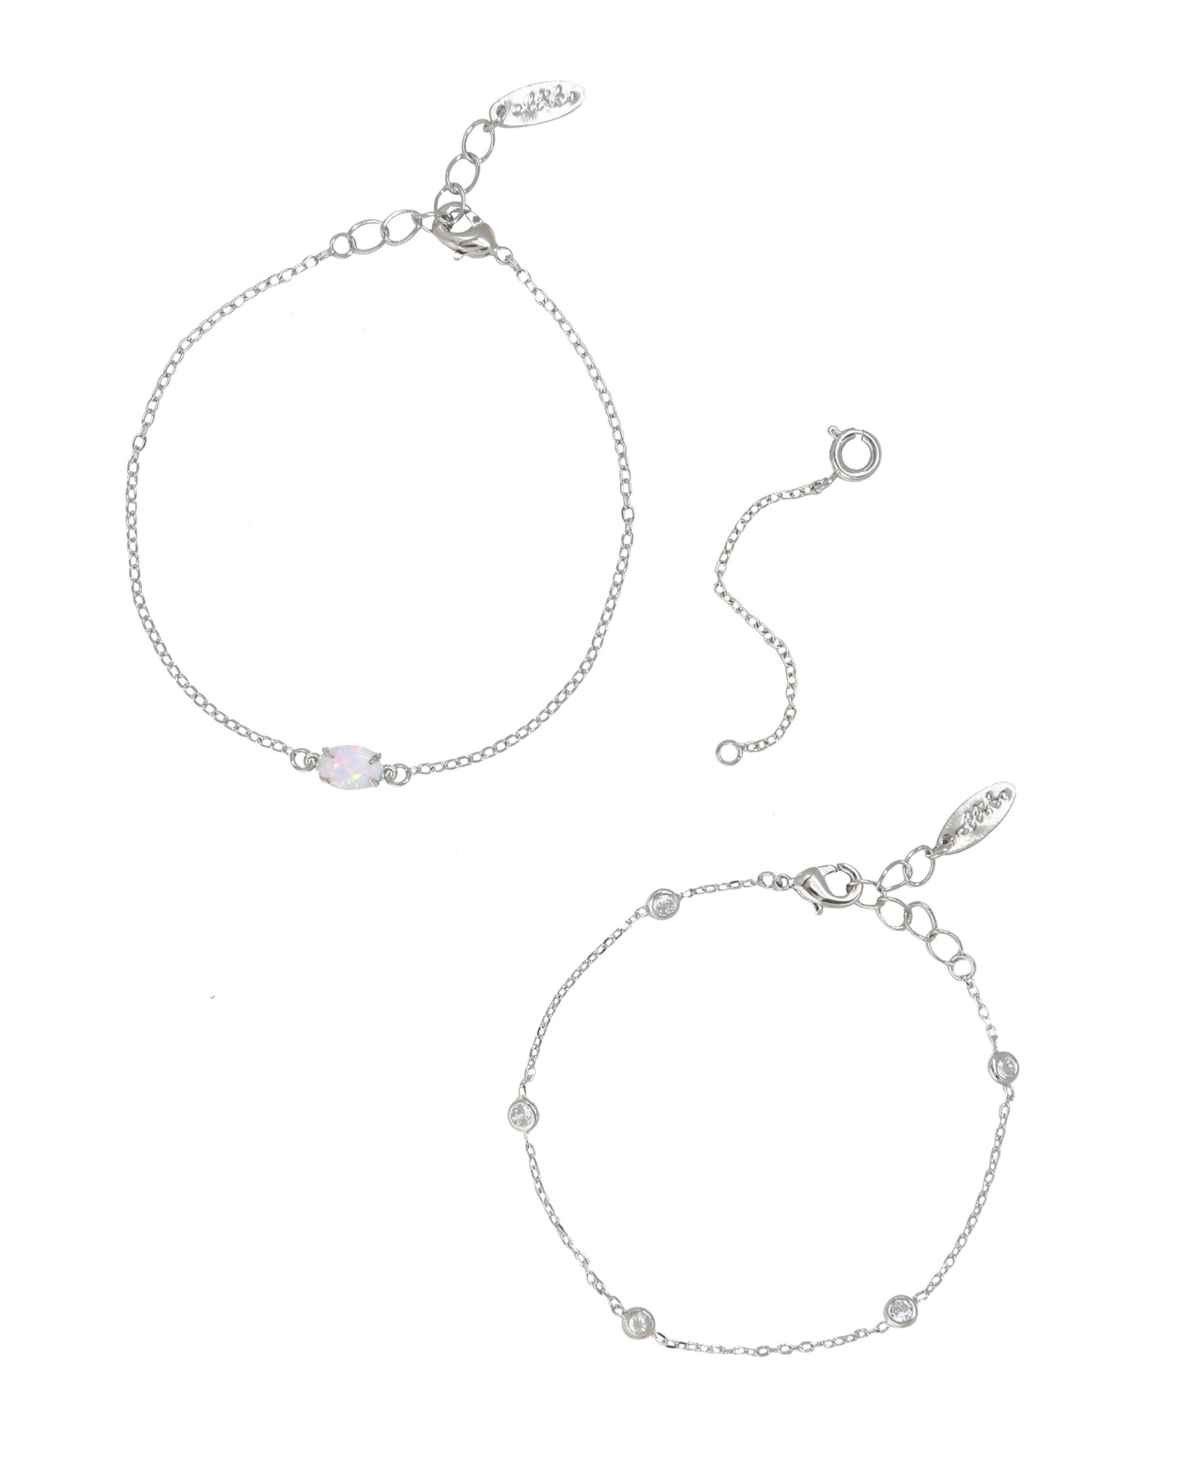 Opal Crystal Dainty Women's Bracelet Set with Extender Add On - Silver